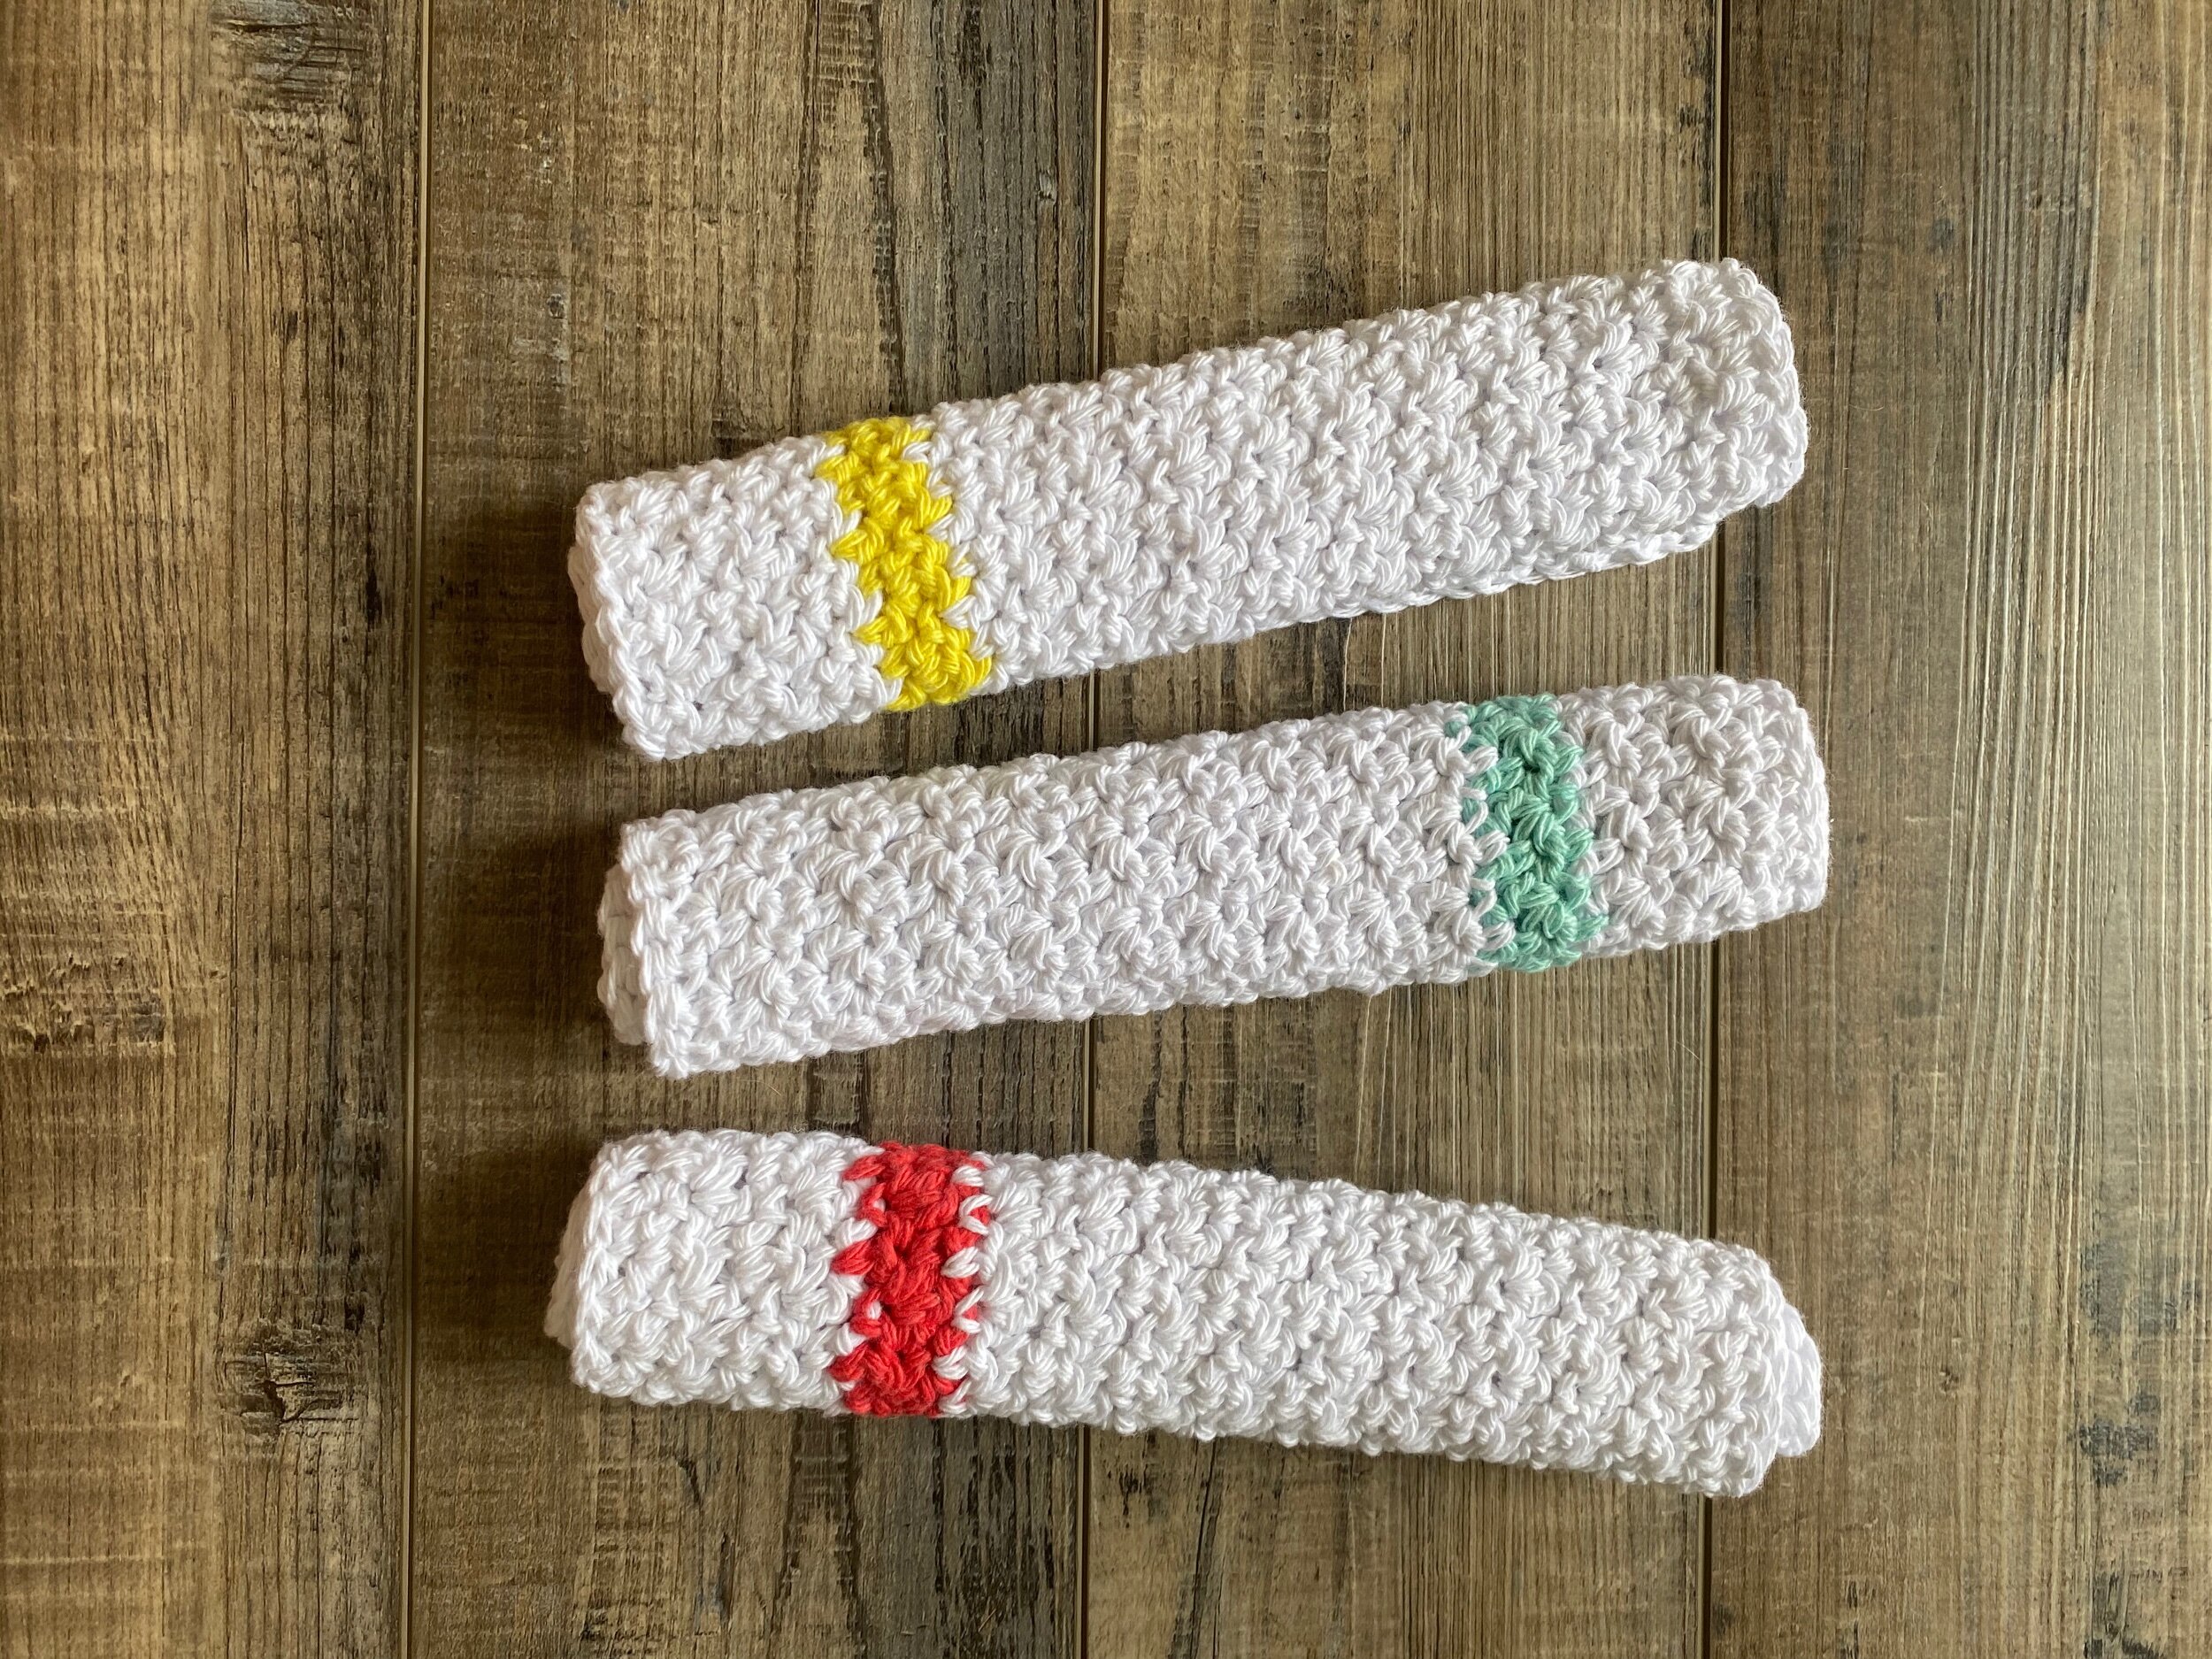 Crochet fridge handle cover  Fridge handle covers, Crochet, Knit stitch  patterns